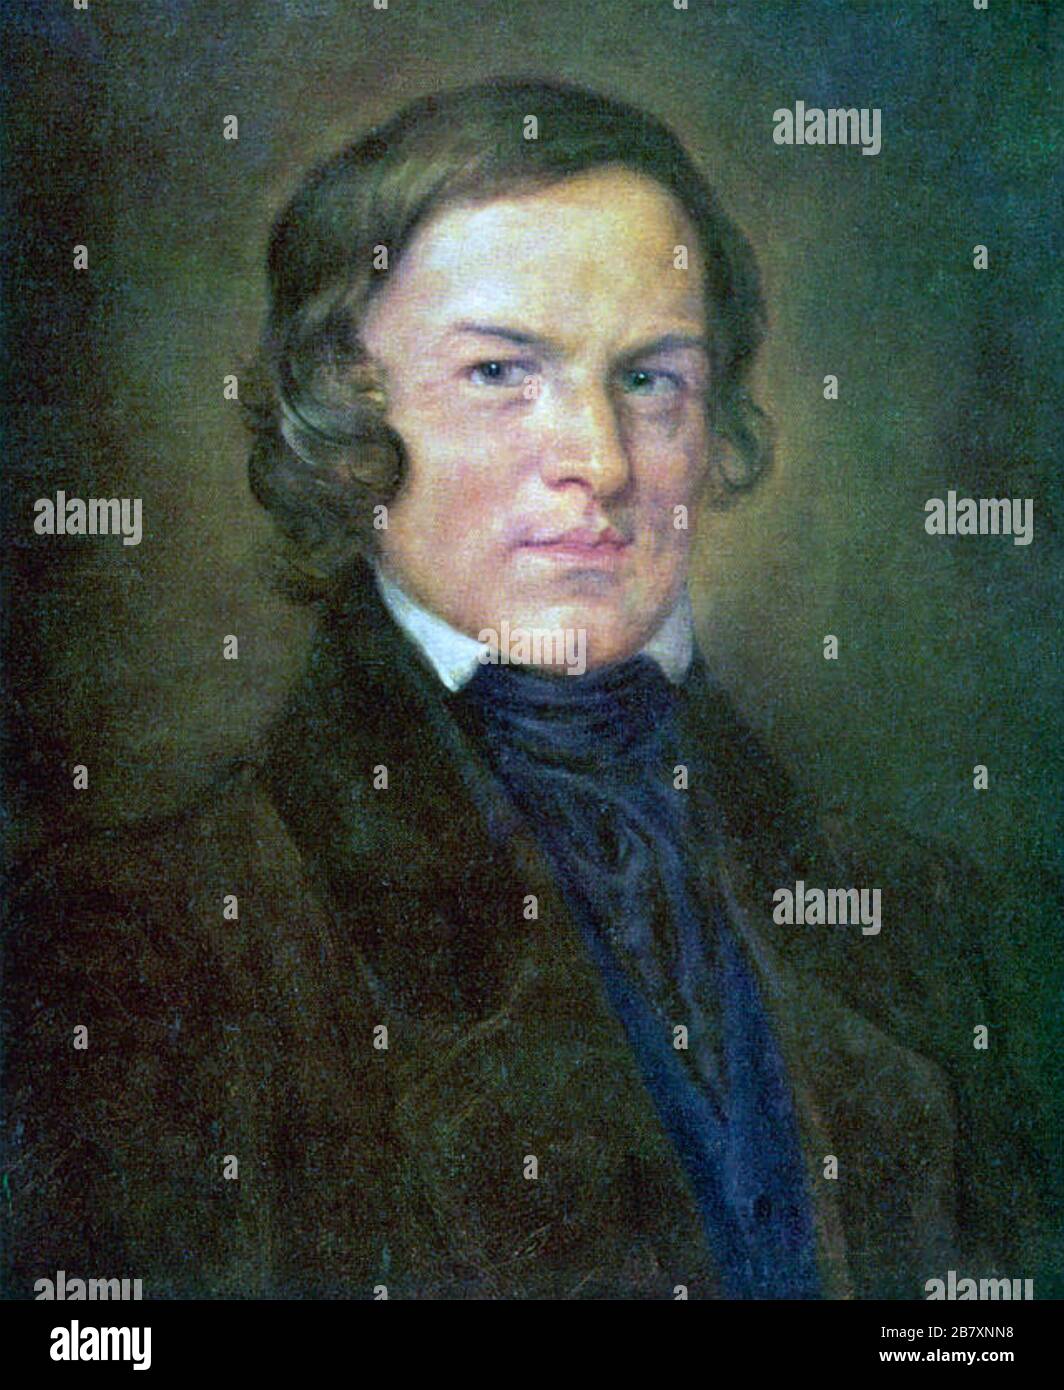 ROBERT SCHUMANN (1810-1856) compositeur allemand vers 1845 Banque D'Images